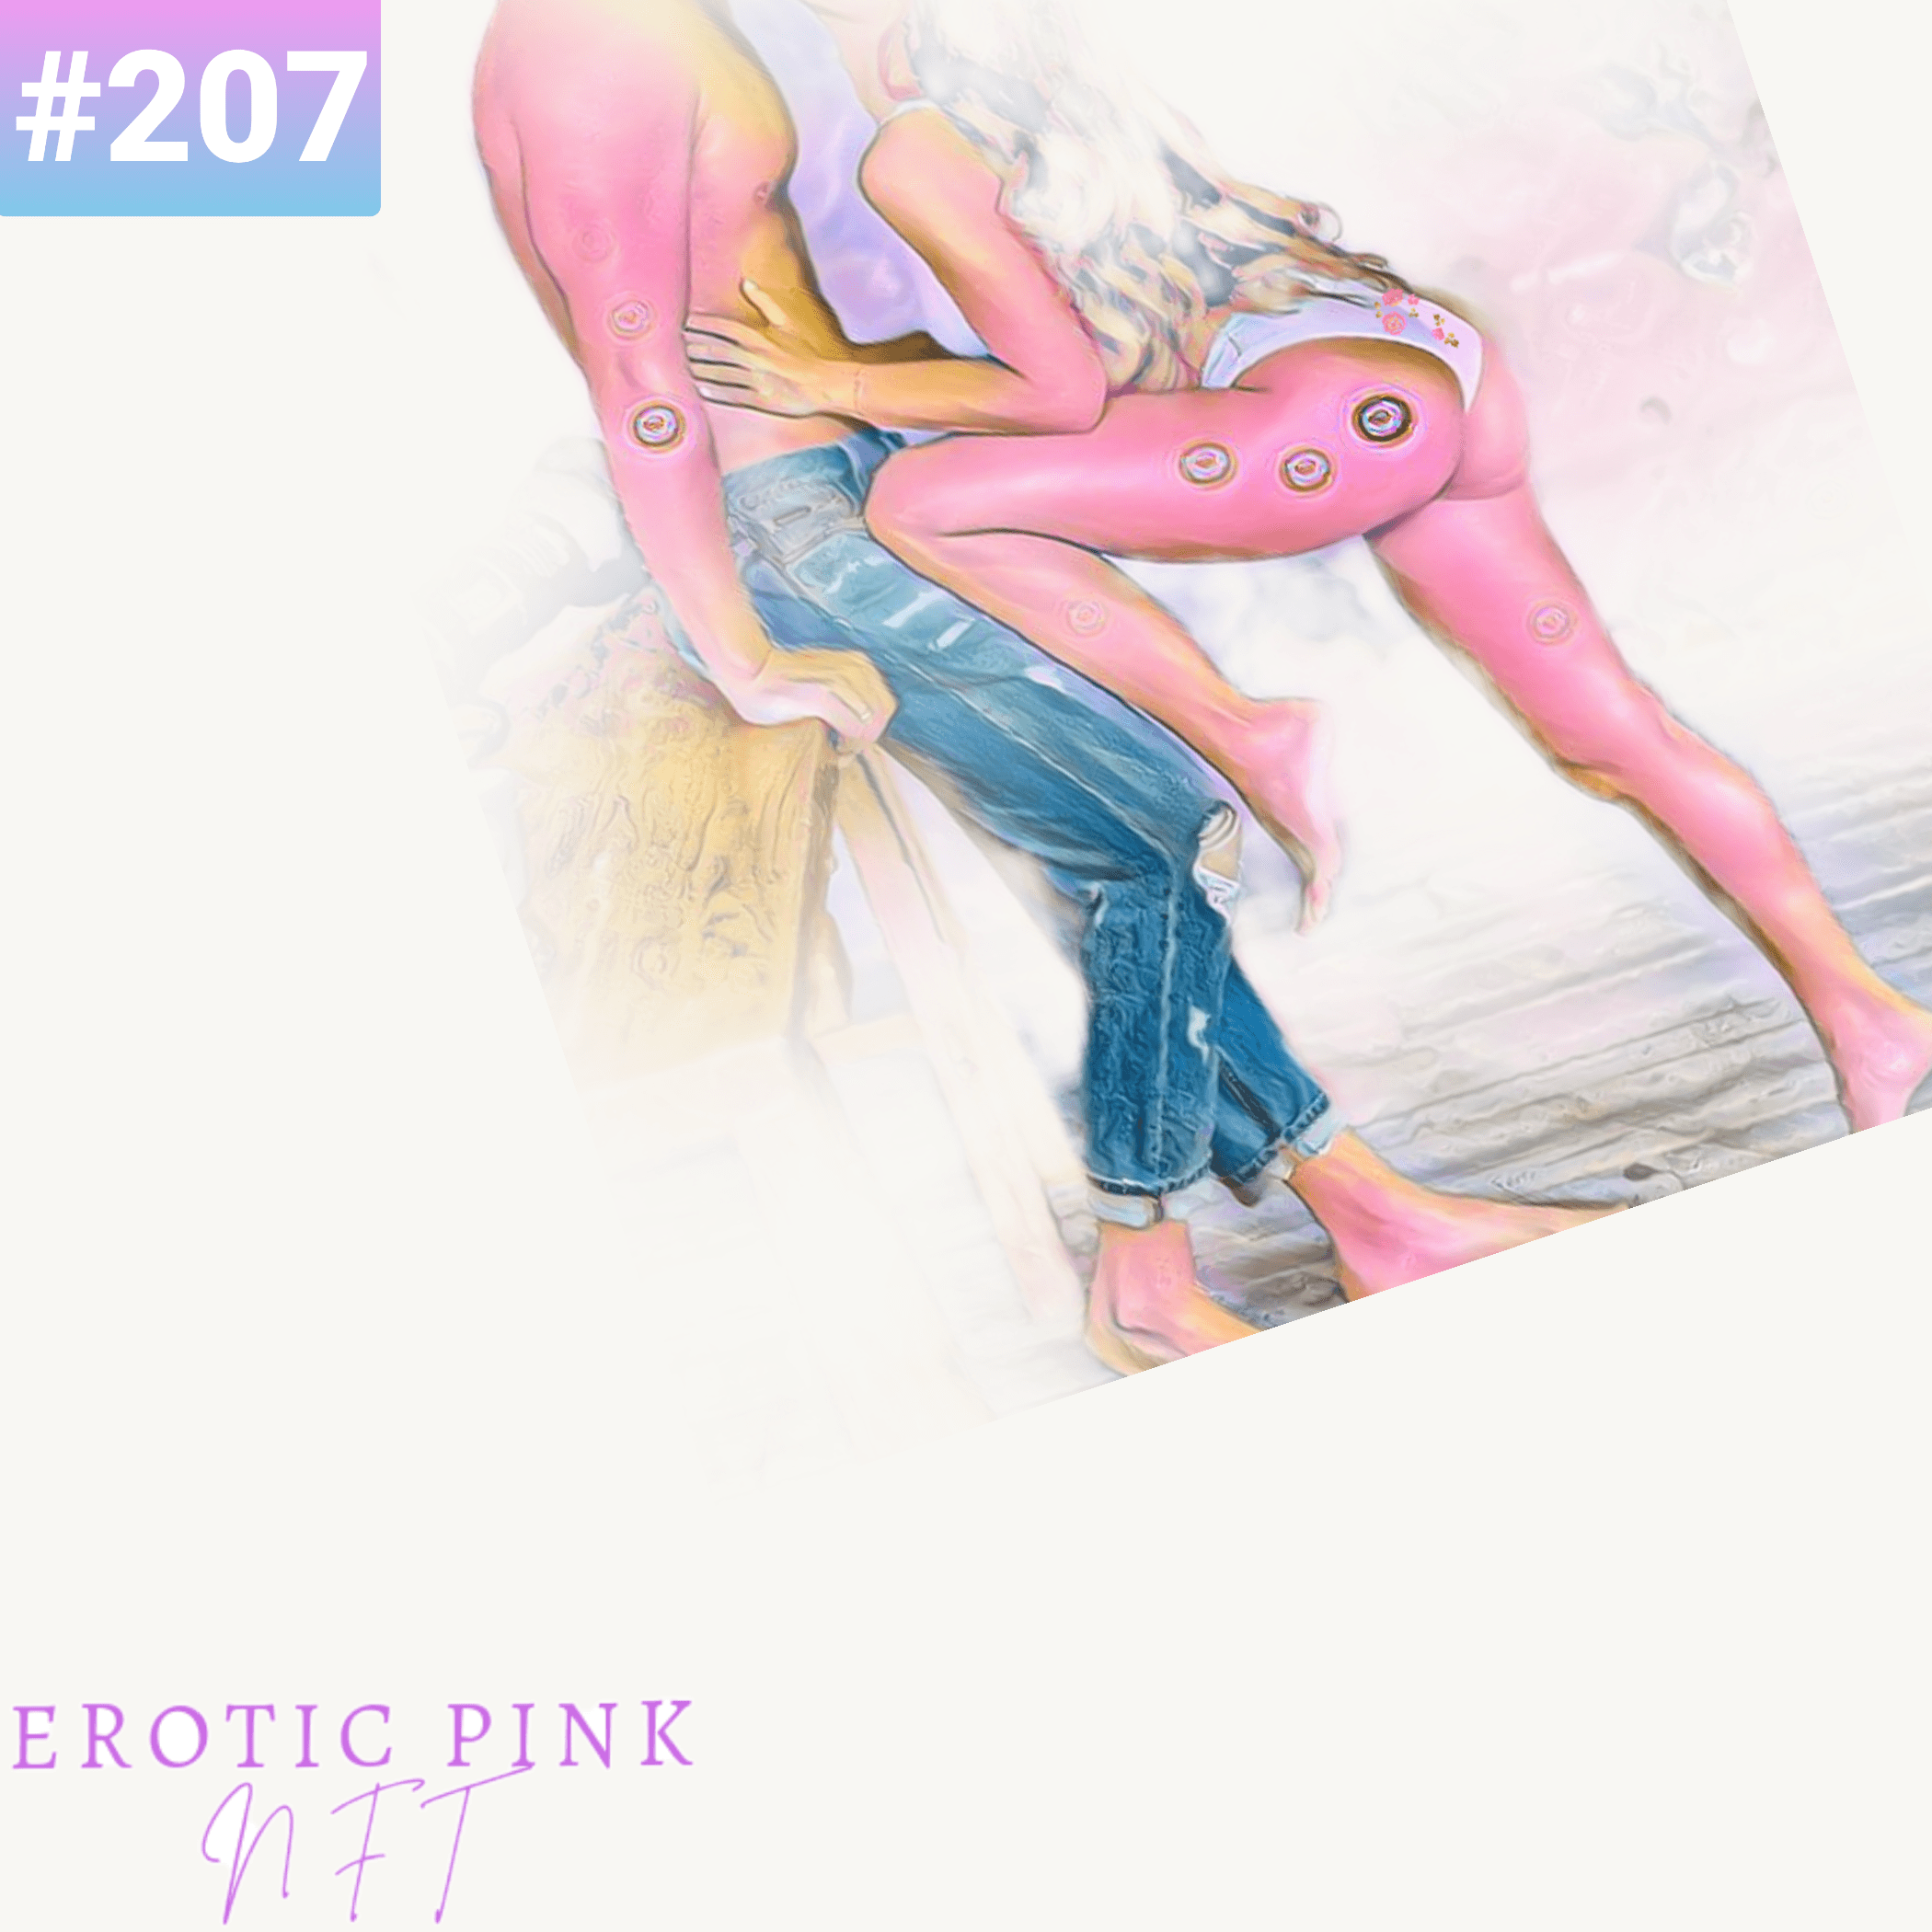 Erotic Pink #207